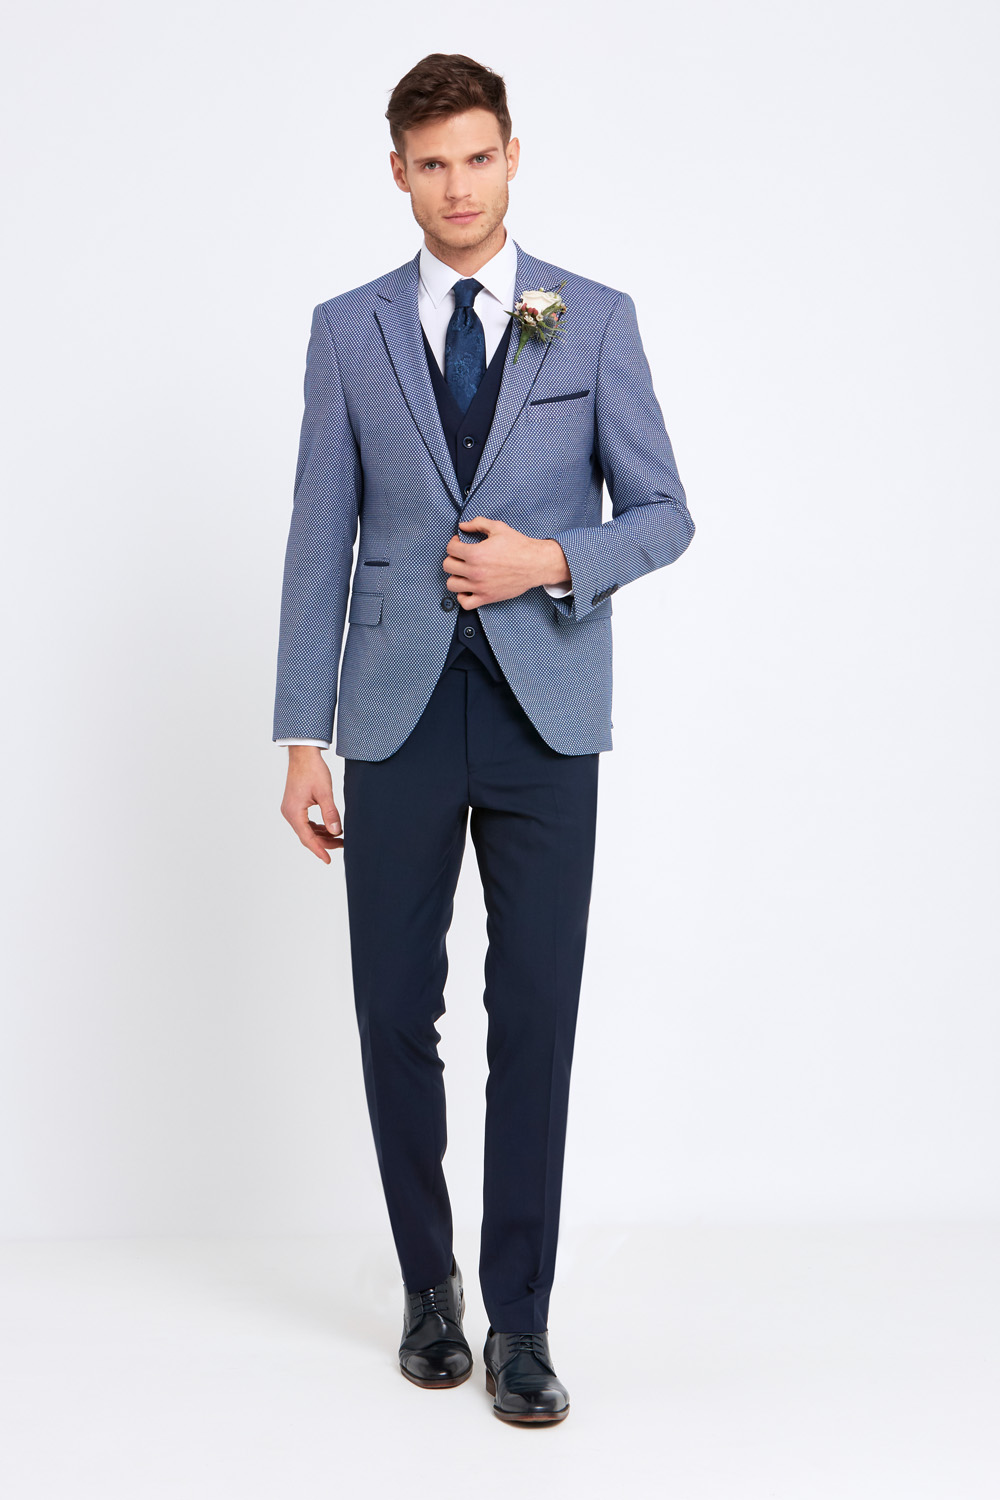 Alexander Blue 3 Piece Suit - Tom Murphy's Formal and Menswear